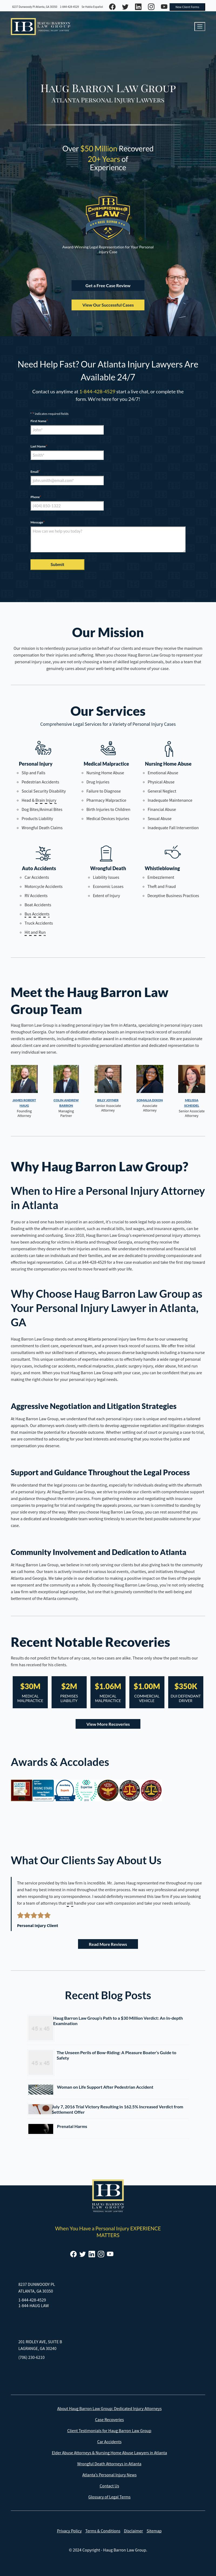 Haug Law Group - Atlanta GA Lawyers